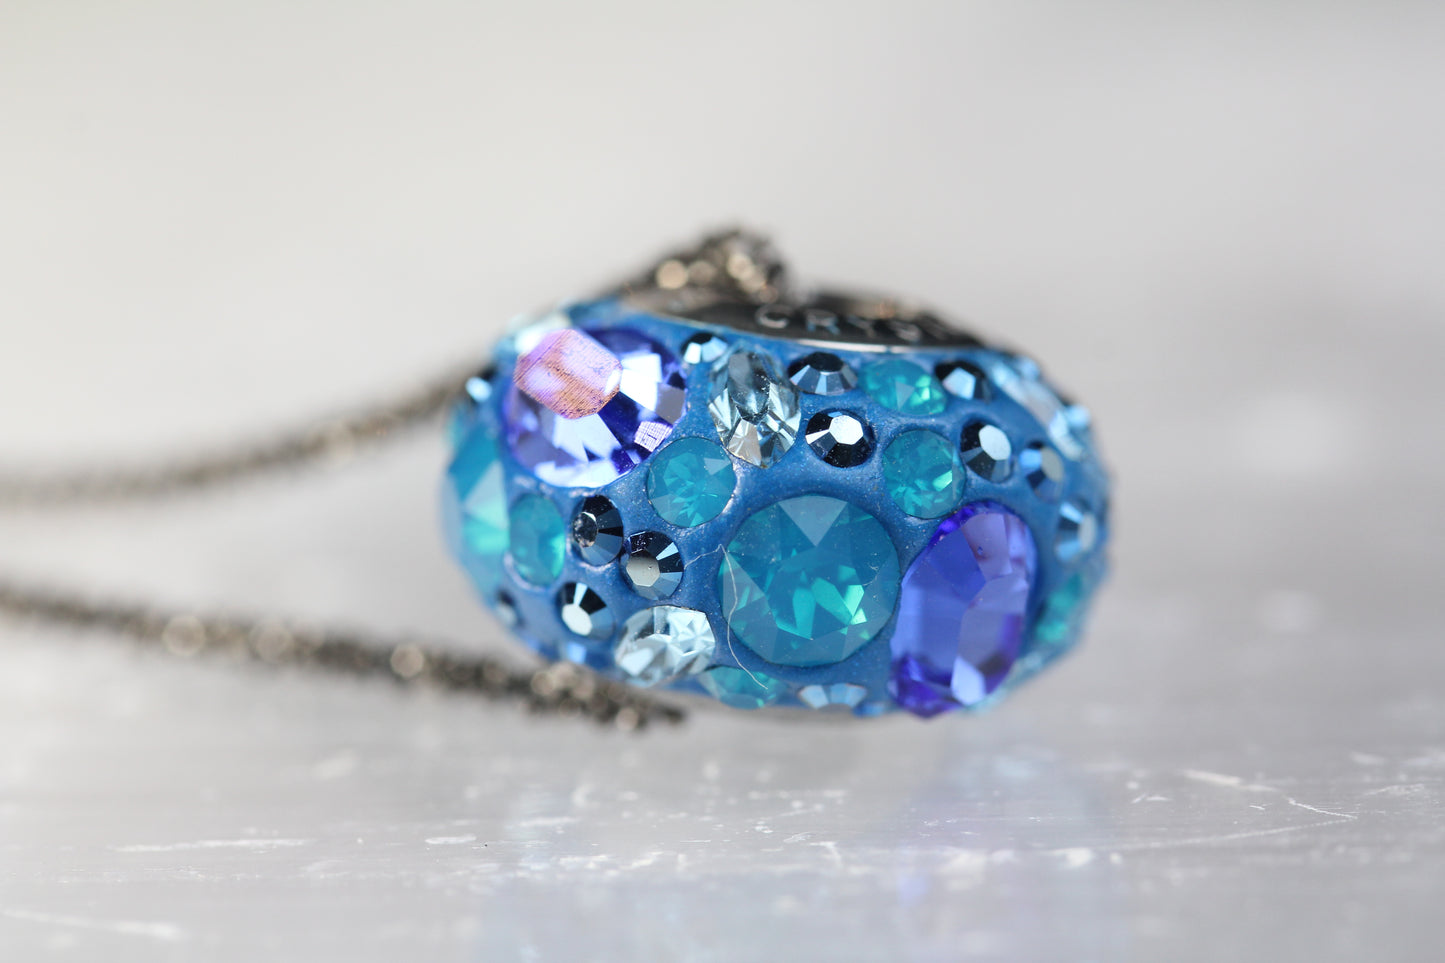 Bermuda Blue Pave Swarovski Crystal Bead Necklace